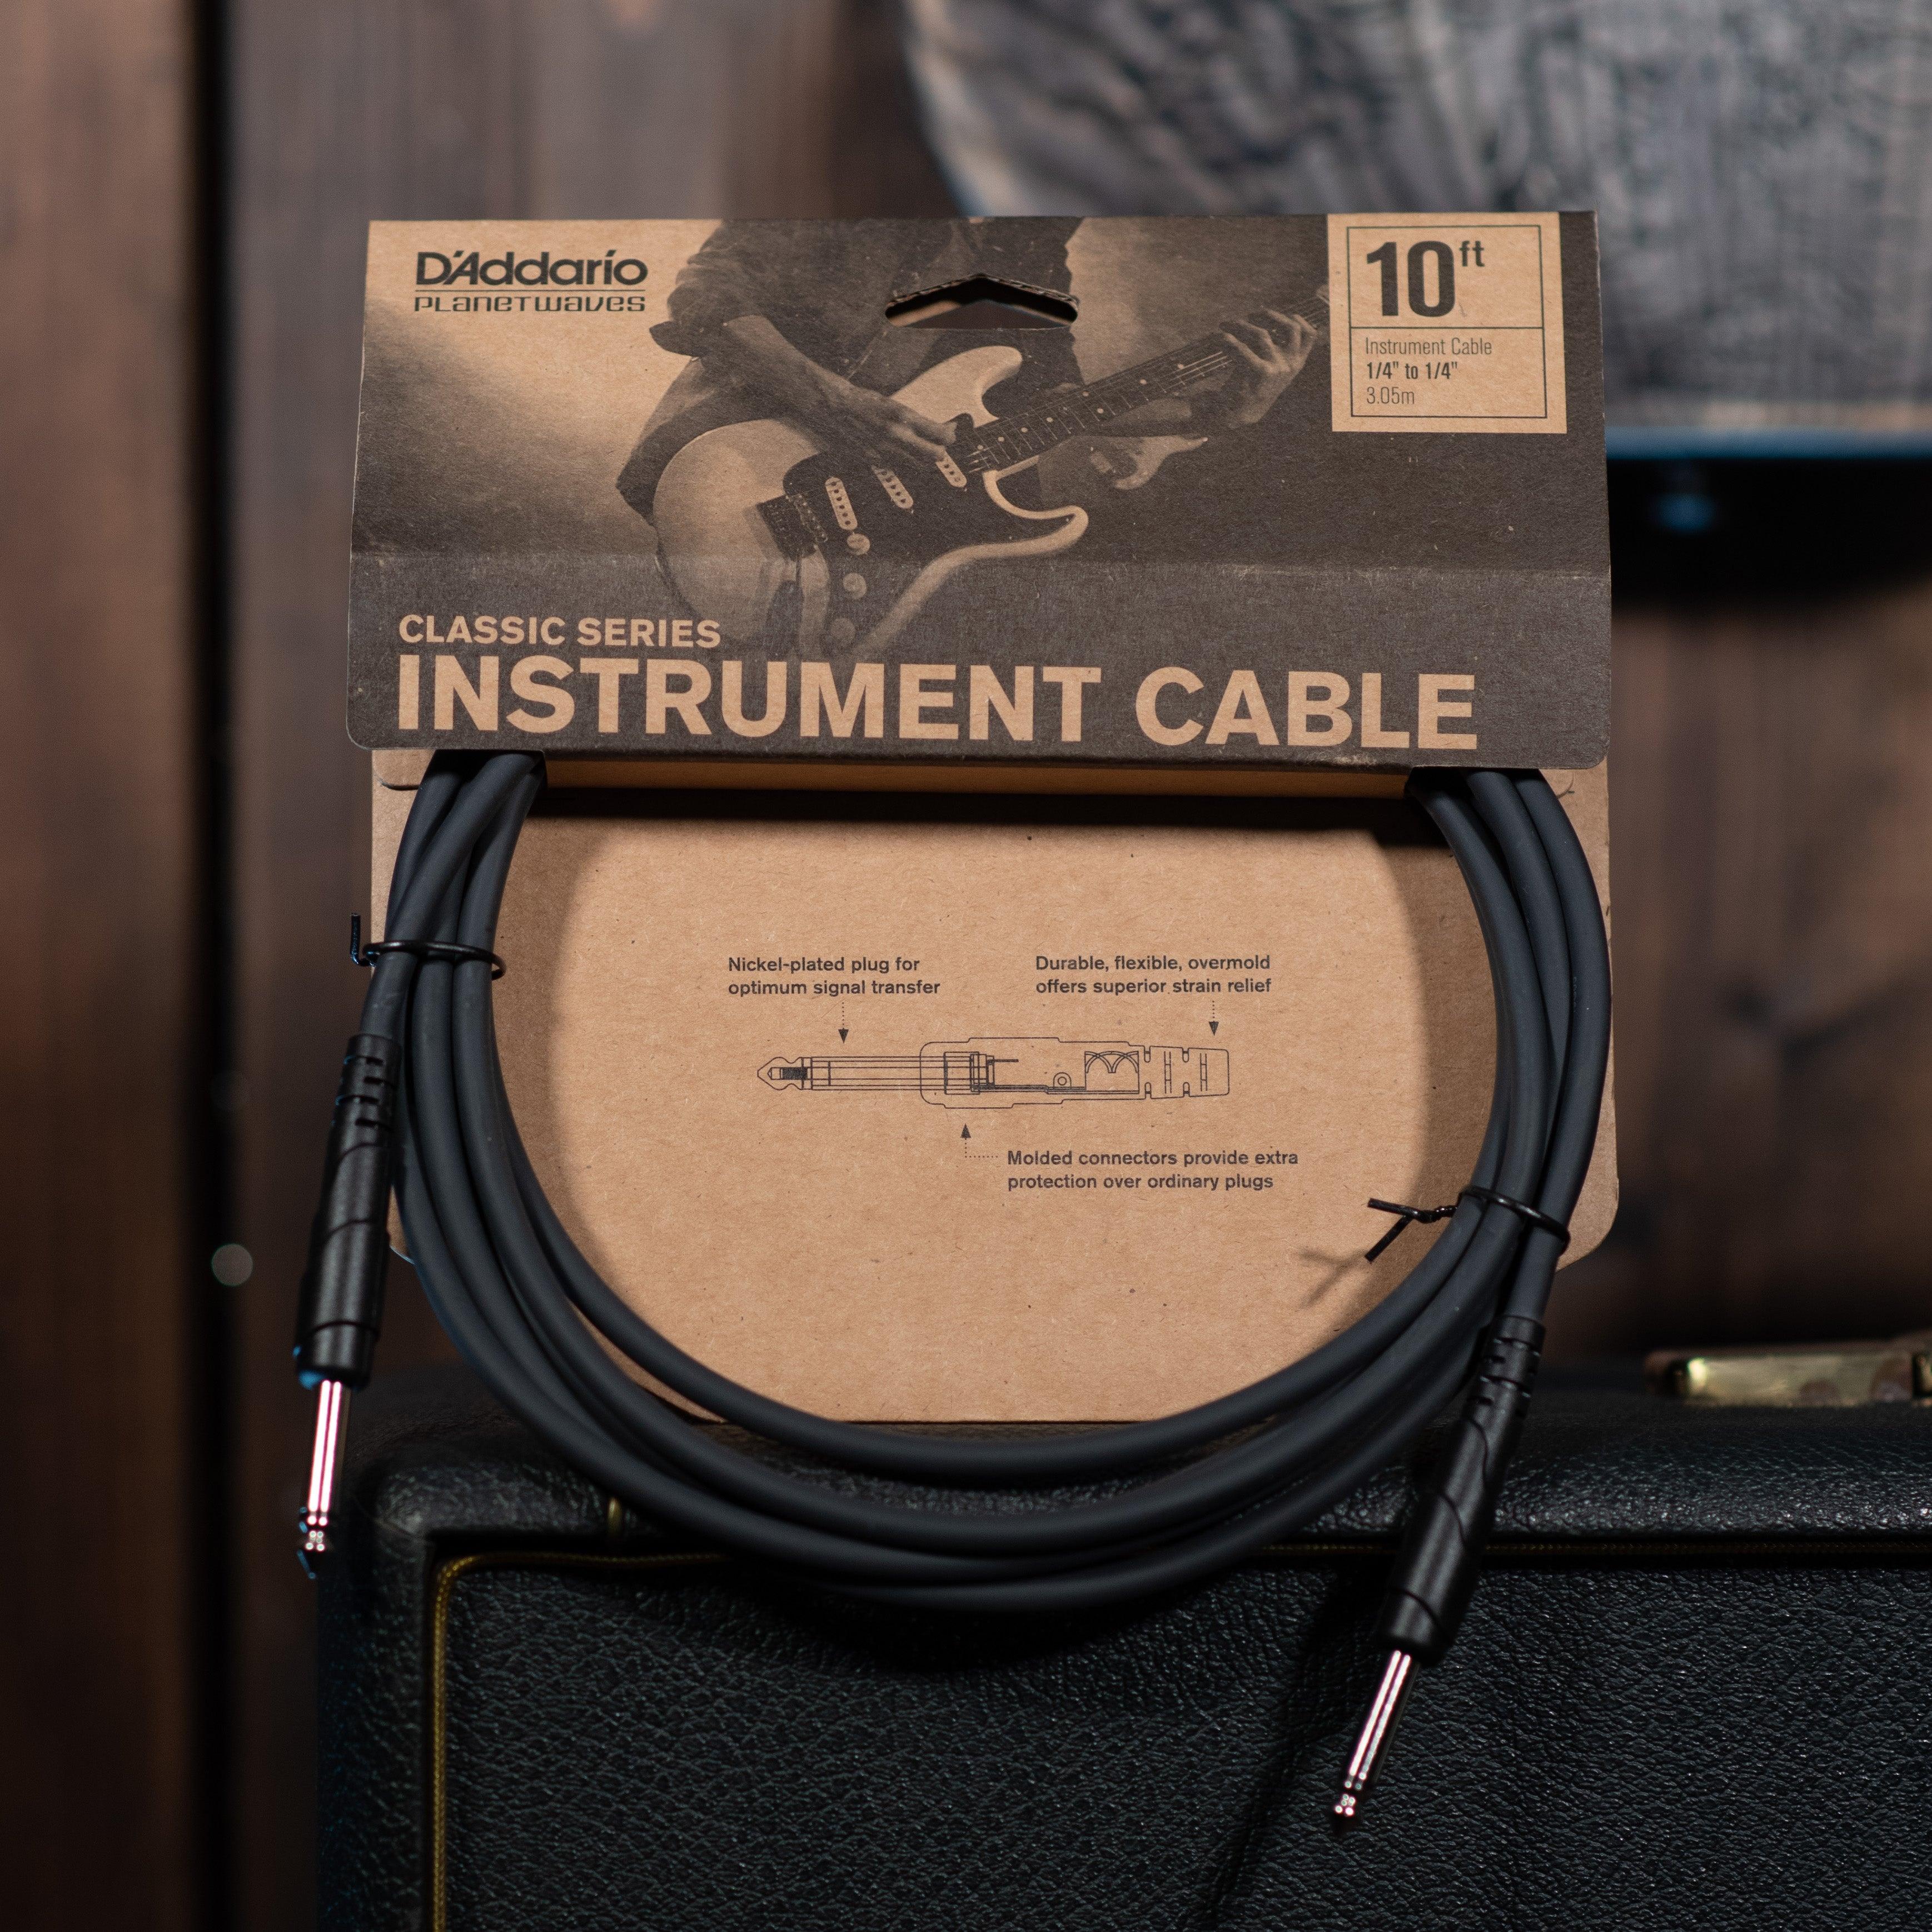 D'addario Classic Series Cable 10 ft. - Impulse Music Co.